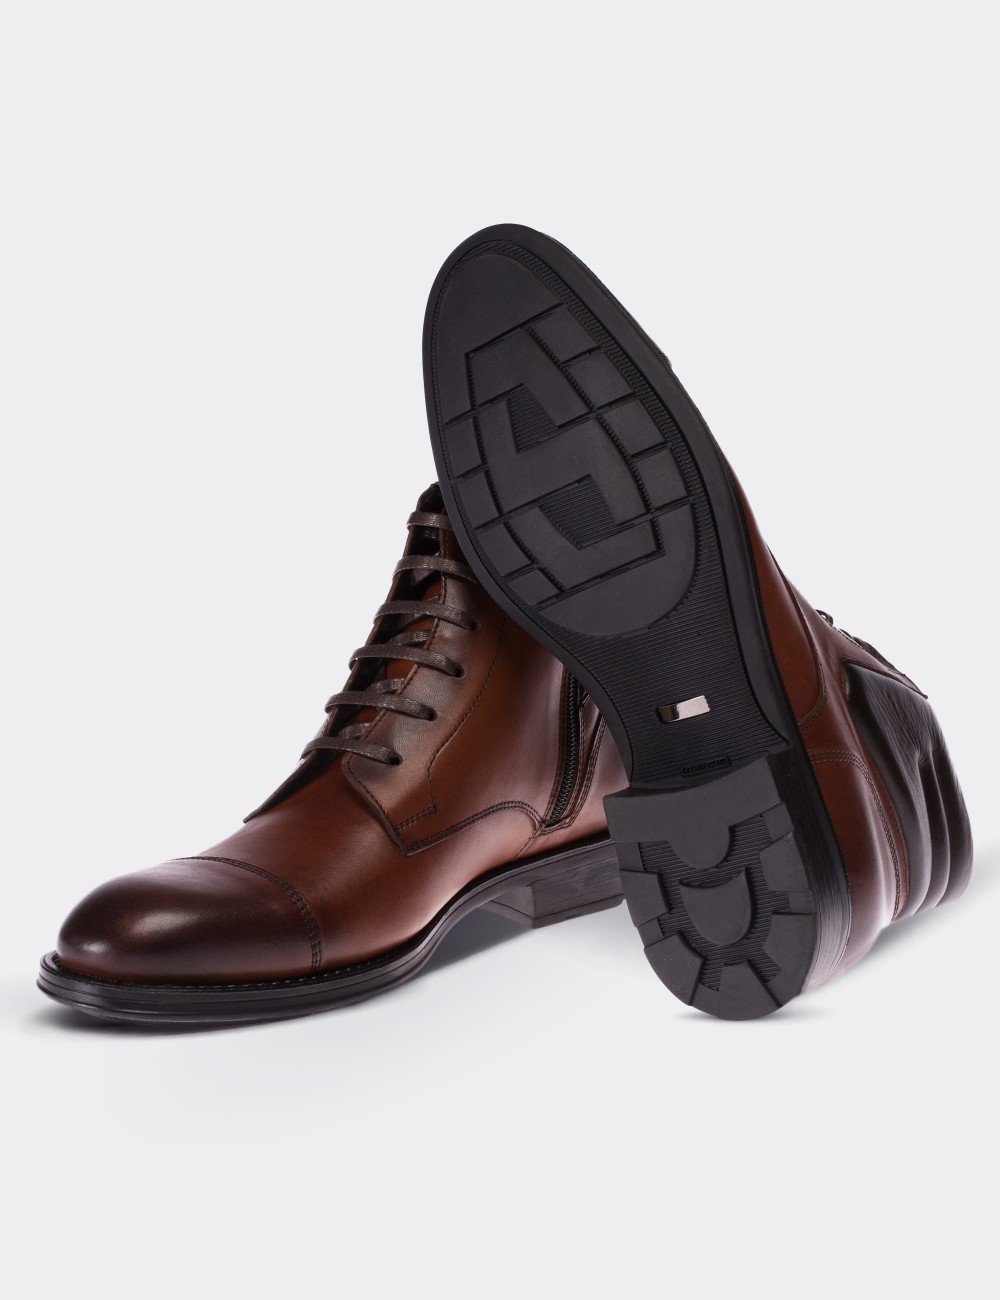 Tan  Leather Boots - 01752MTBAC02